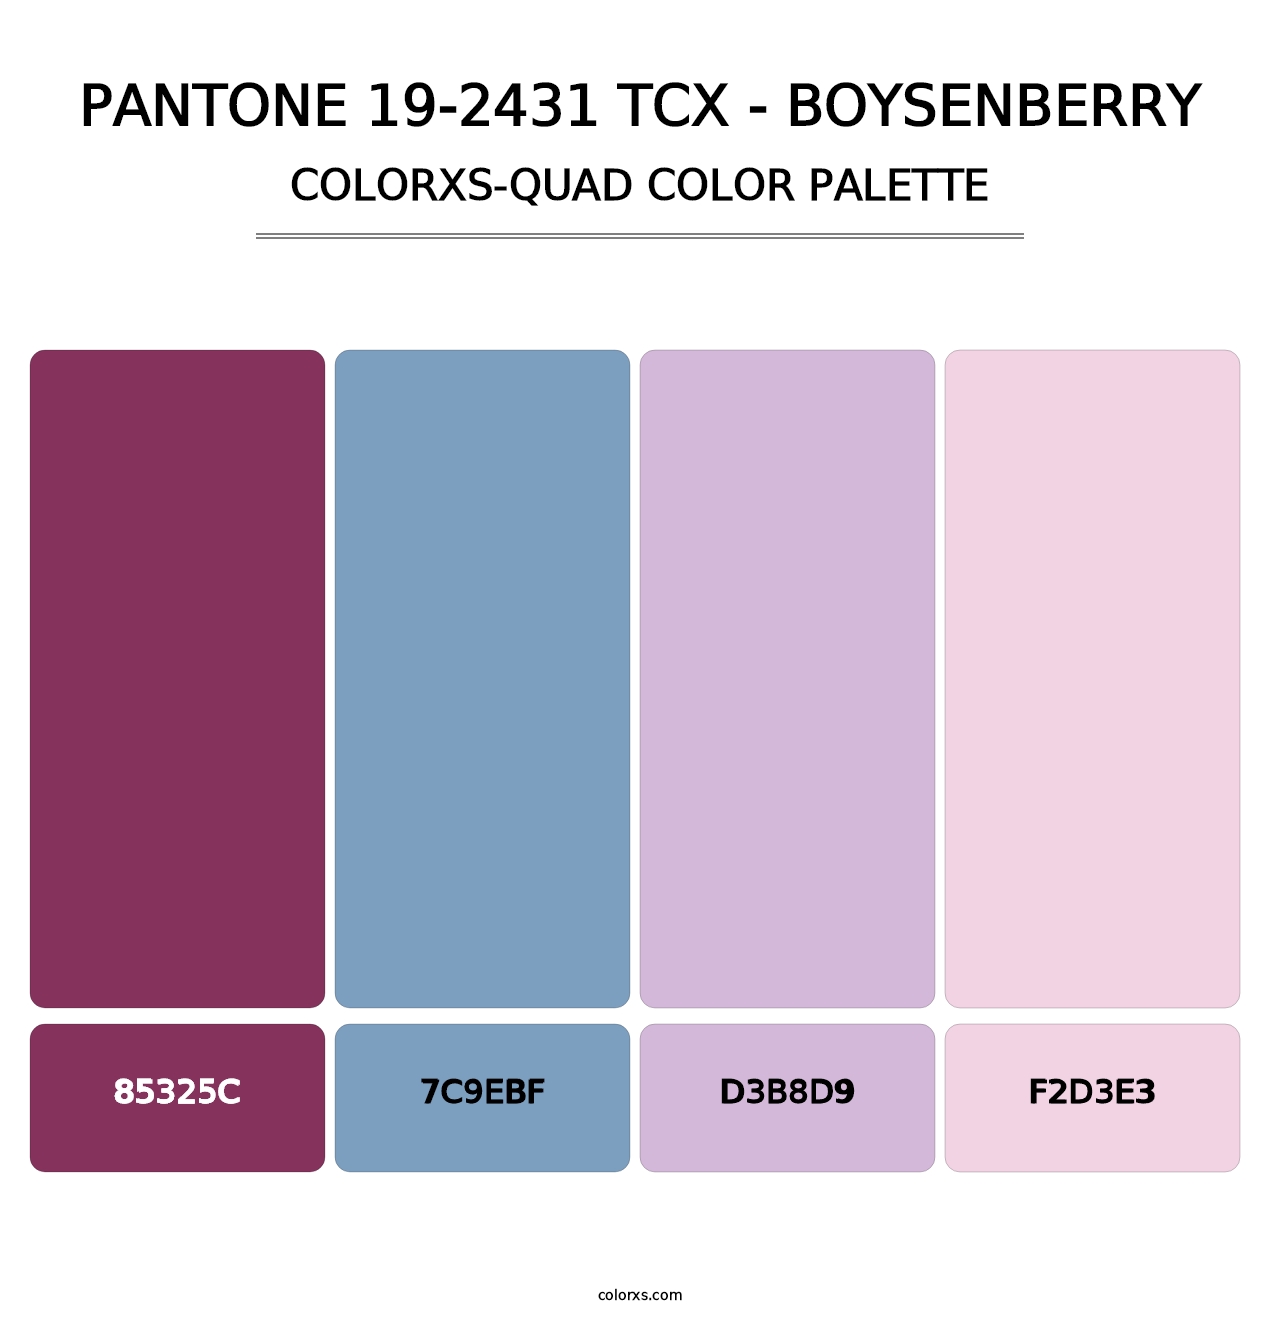 PANTONE 19-2431 TCX - Boysenberry - Colorxs Quad Palette